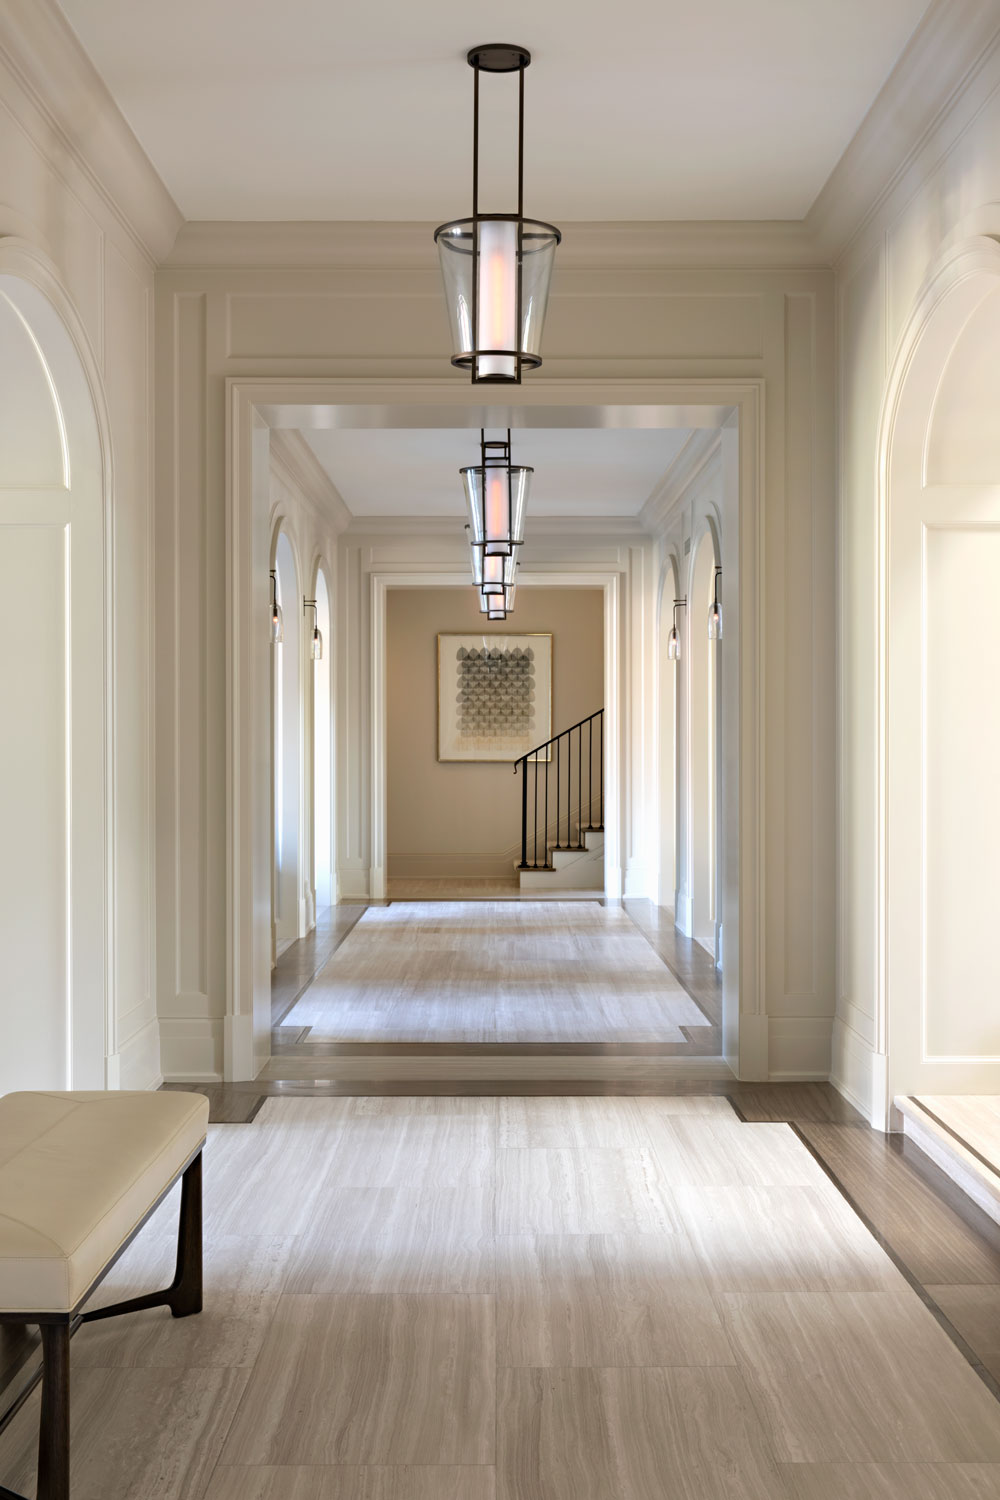 07-transitional-hallway-sleek-paneled-walls-inlay-floor-gary-drake-general-contractor.jpg